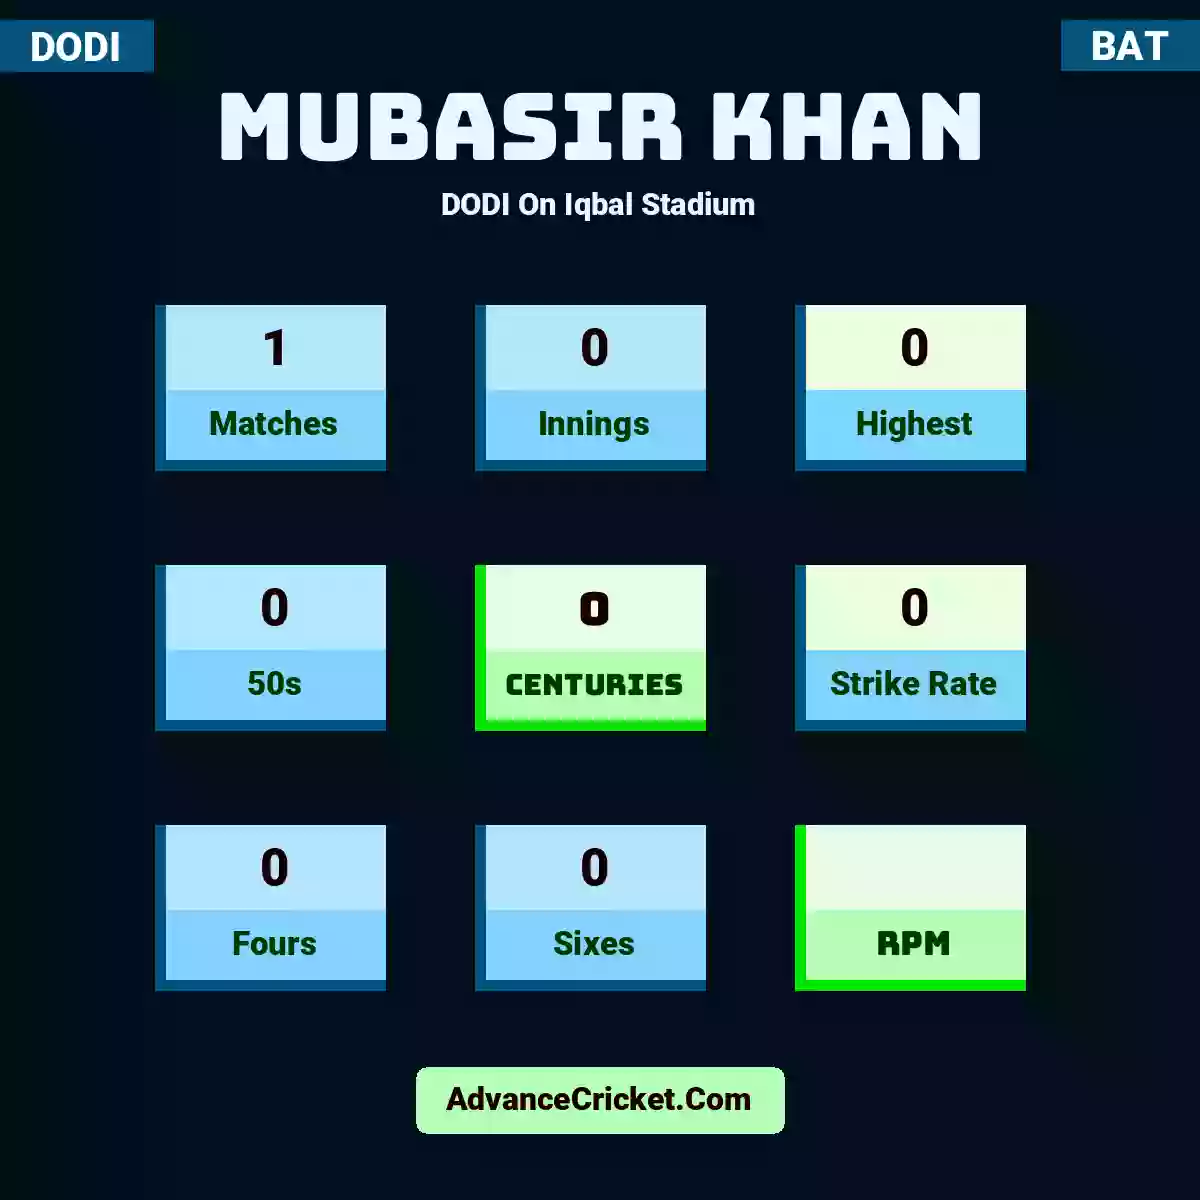 Mubasir Khan DODI  On Iqbal Stadium, Mubasir Khan played 1 matches, scored 0 runs as highest, 0 half-centuries, and 0 centuries, with a strike rate of 0. M.Khan hit 0 fours and 0 sixes.